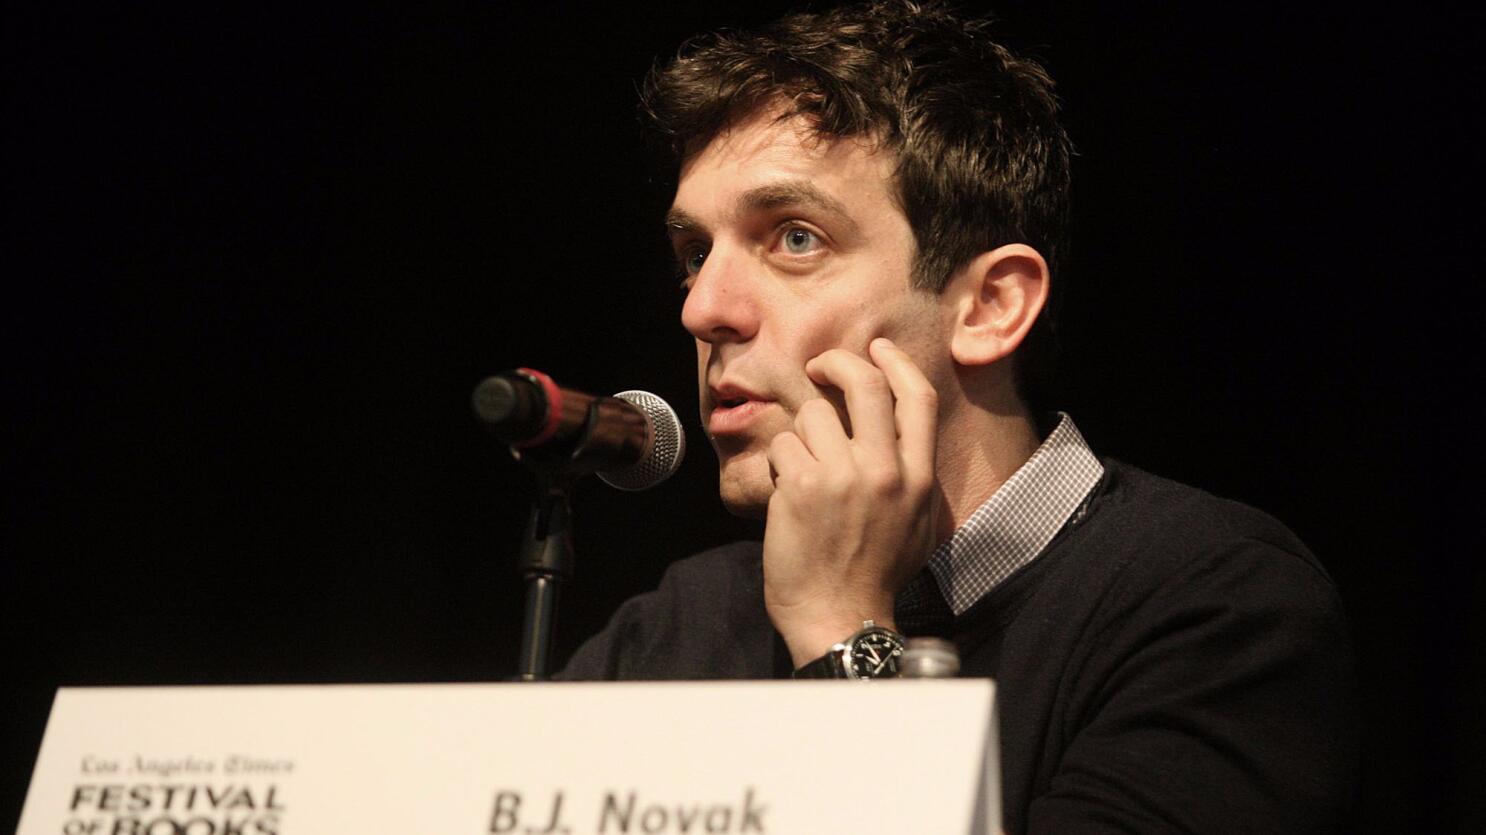 B.J. Novak - Actor, Comedian, Writer